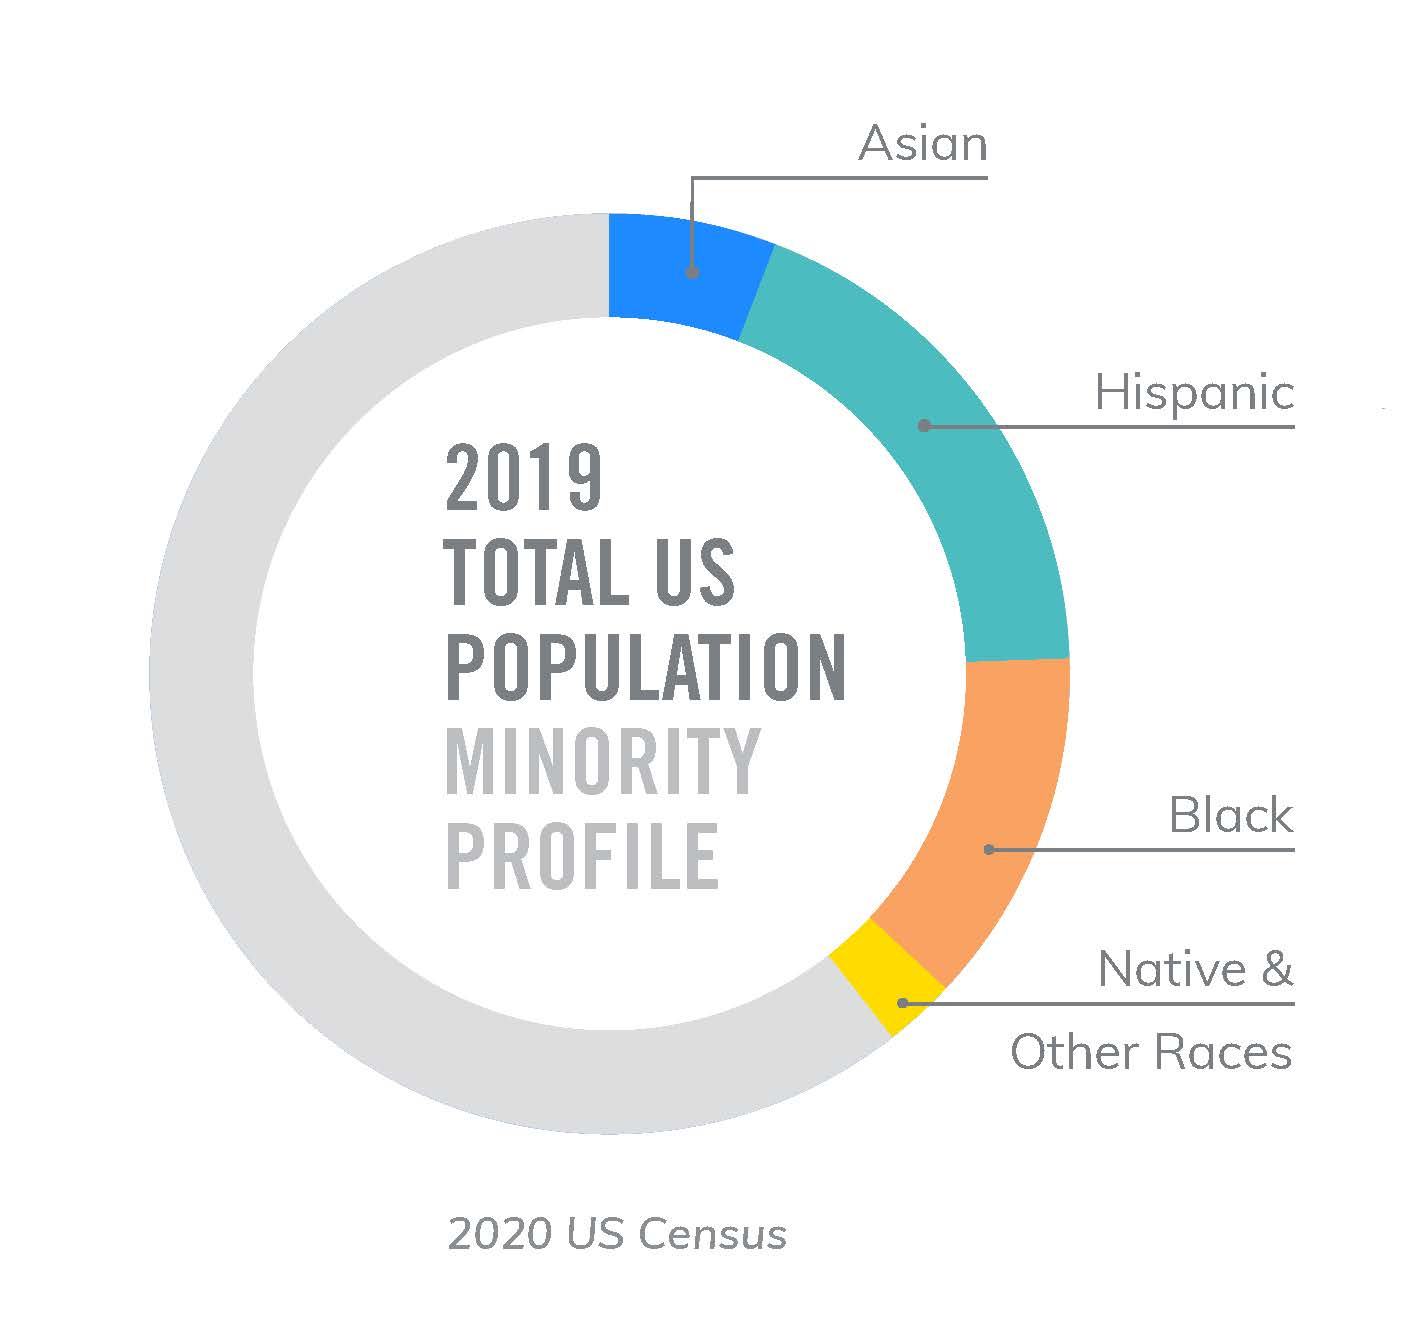 2019 US Minority Profile from 2020 Census